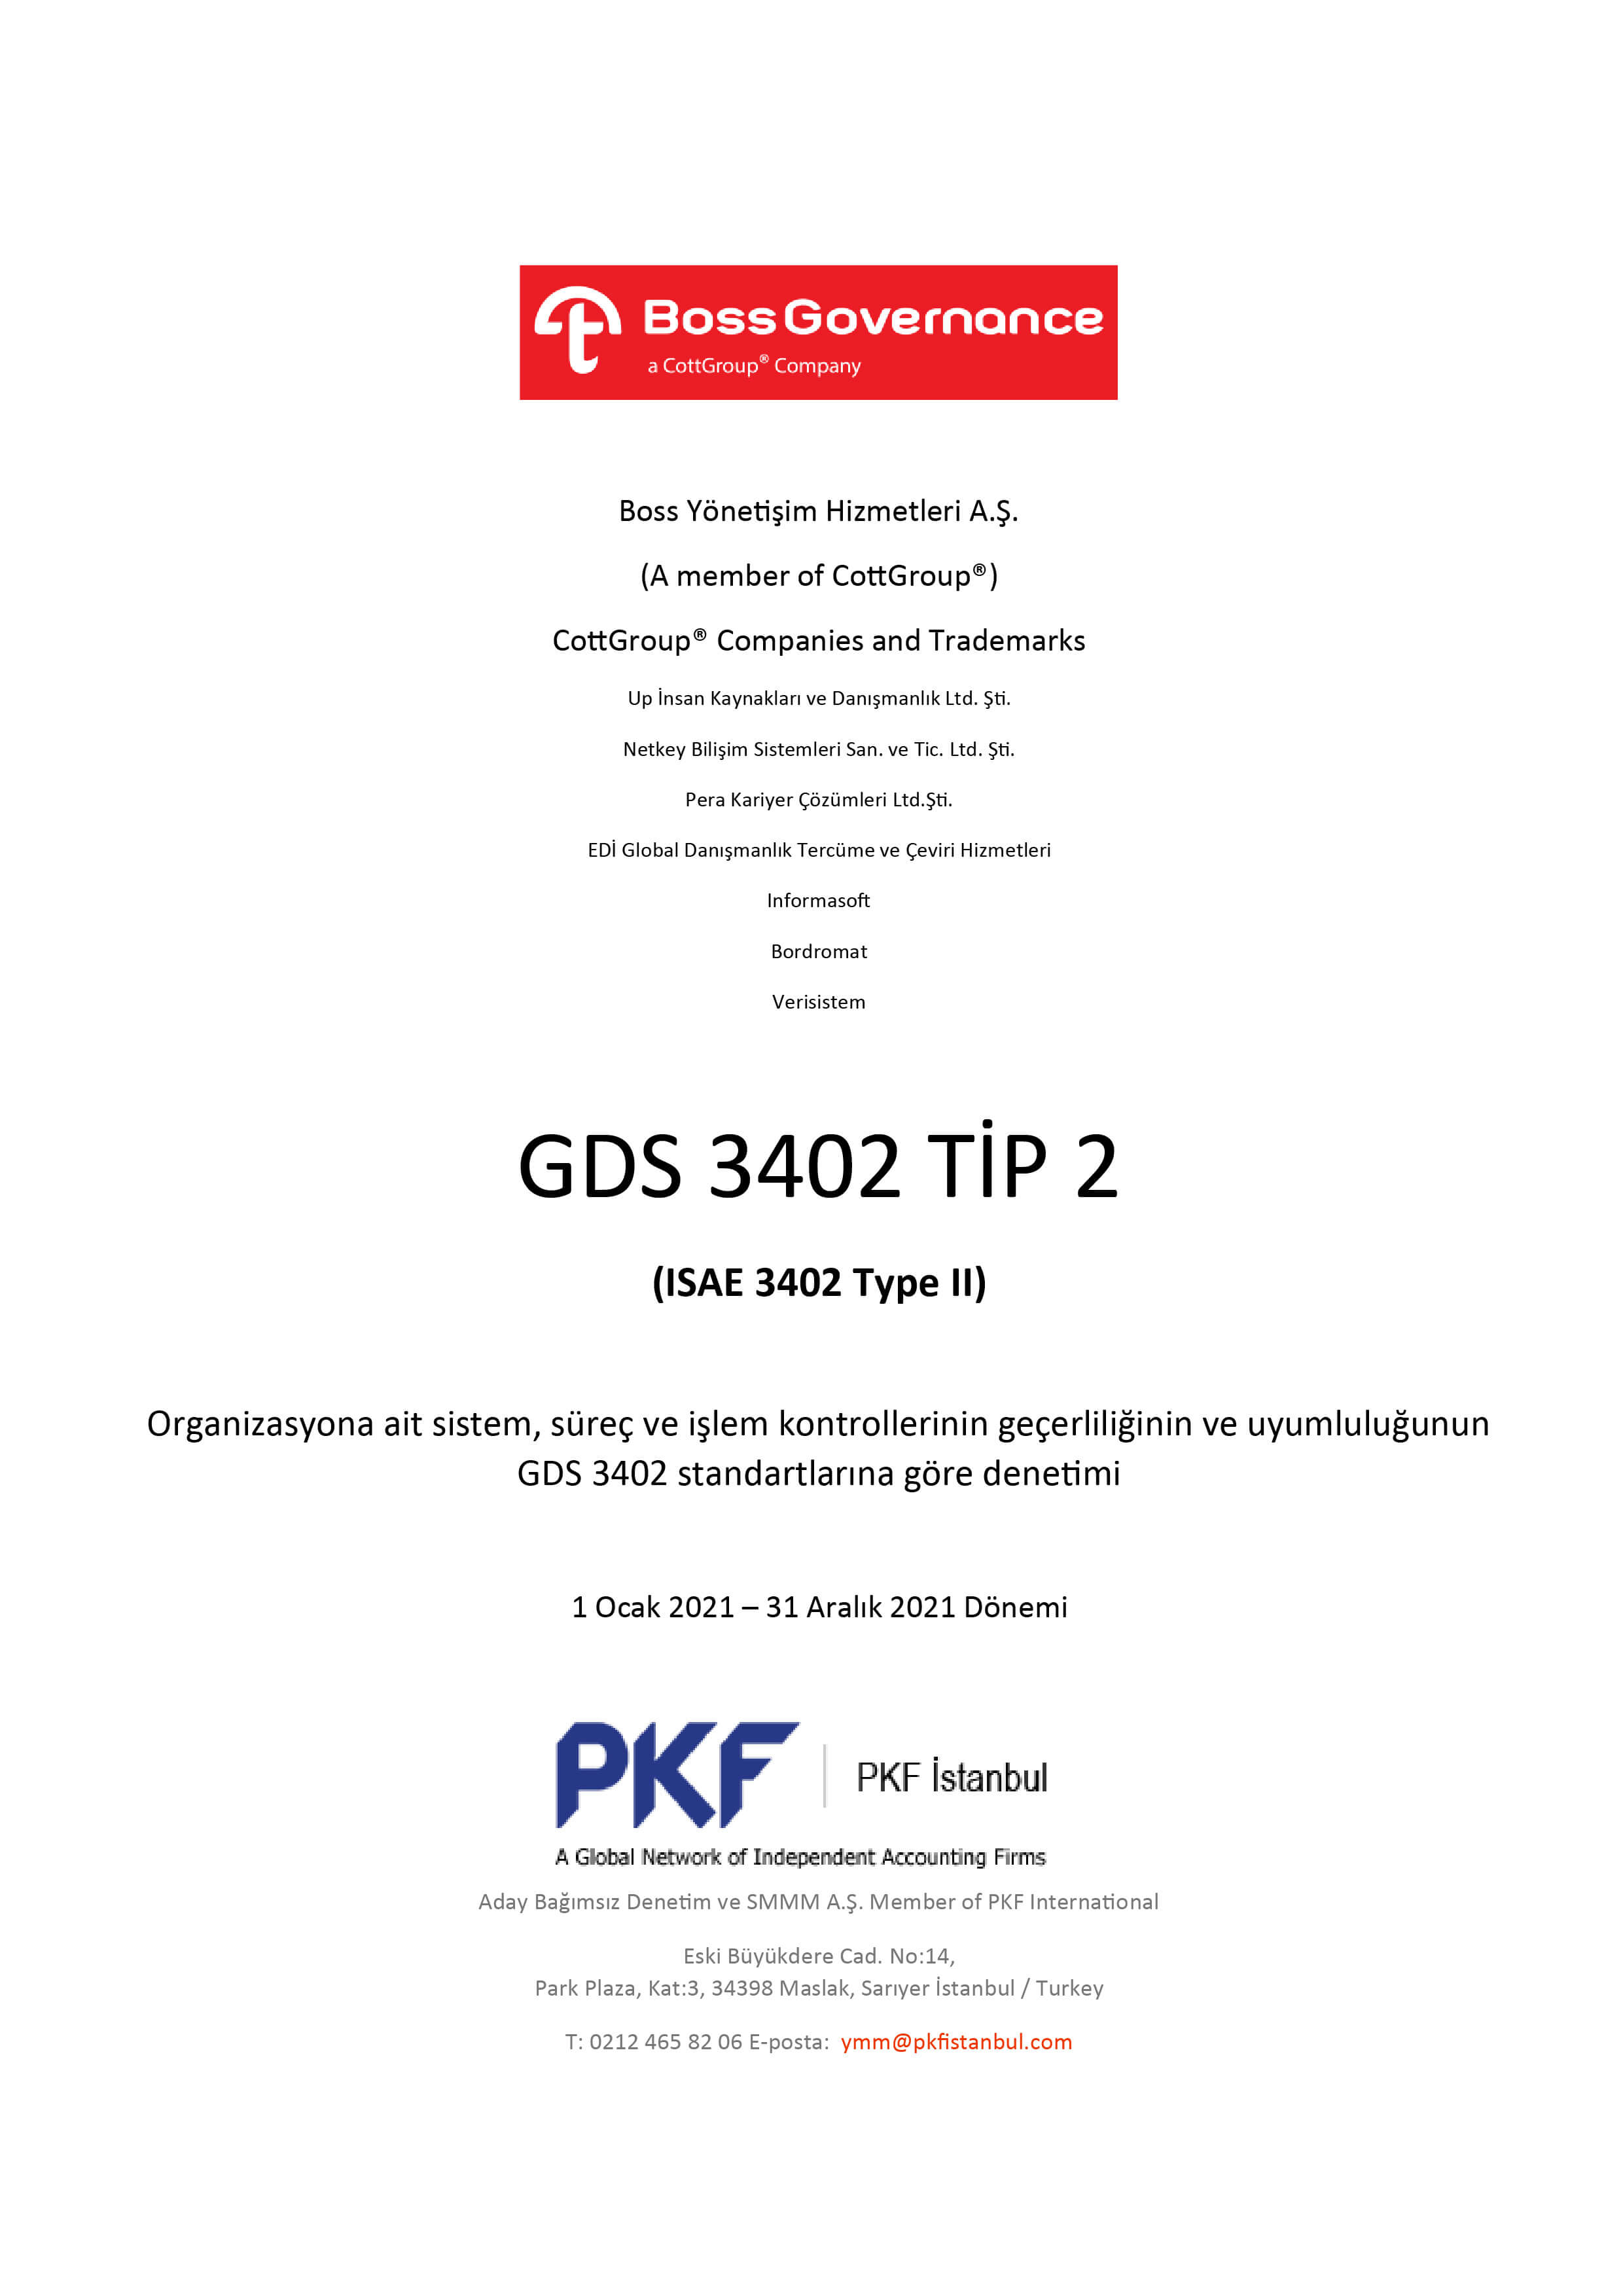 GDS 3402 Tip 2